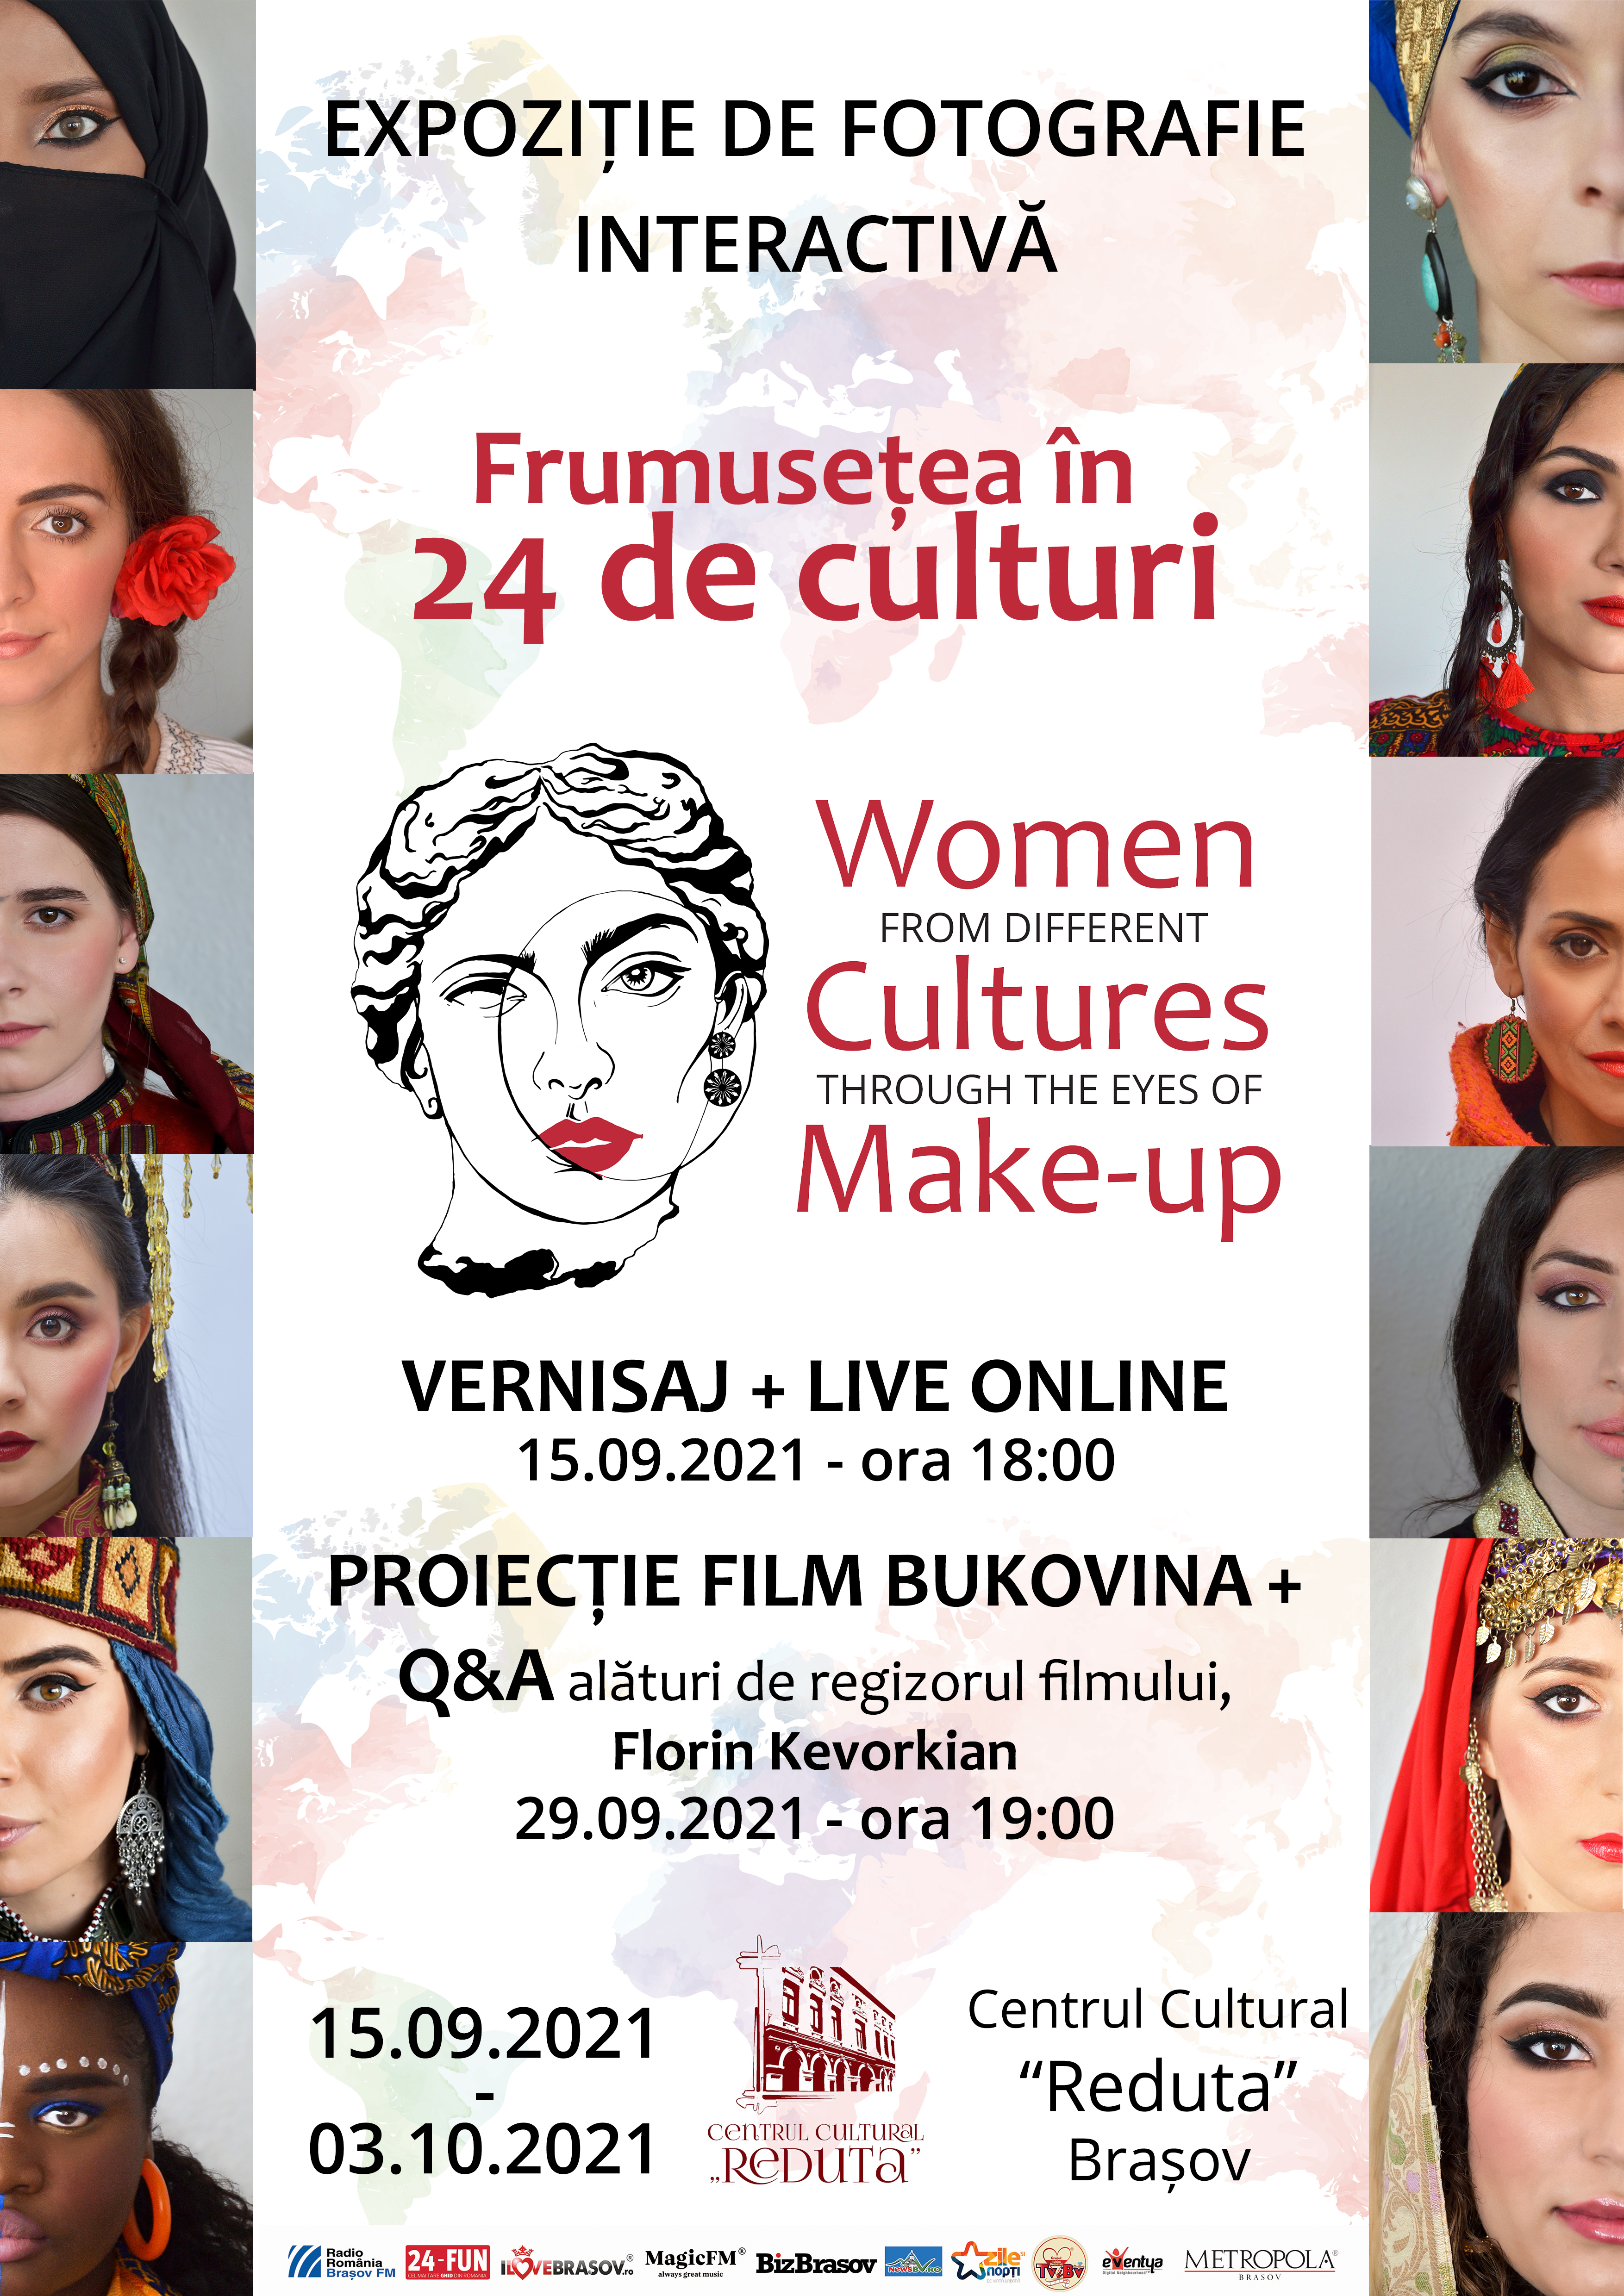 Expoziție de fotografie interactivă - “Women from different cultures through the eyes of make-up” 